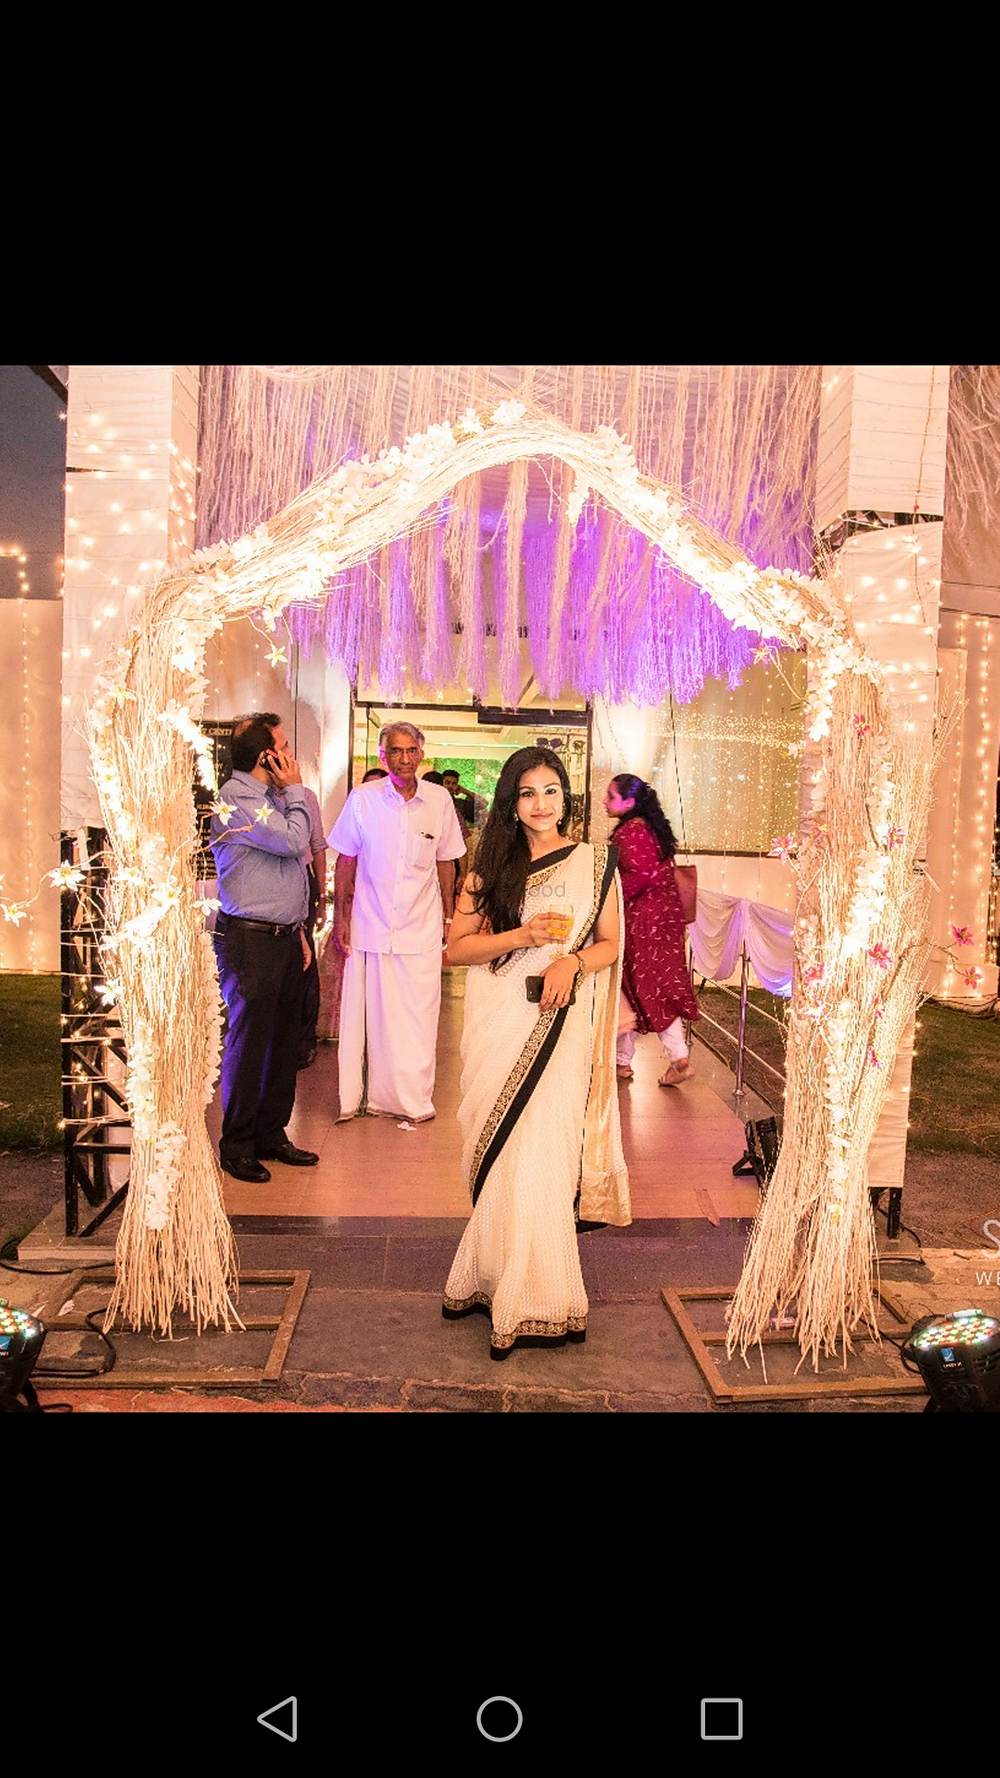 Photo From SUNIT WEDS NITHU - By Shaadhi Wedding Management